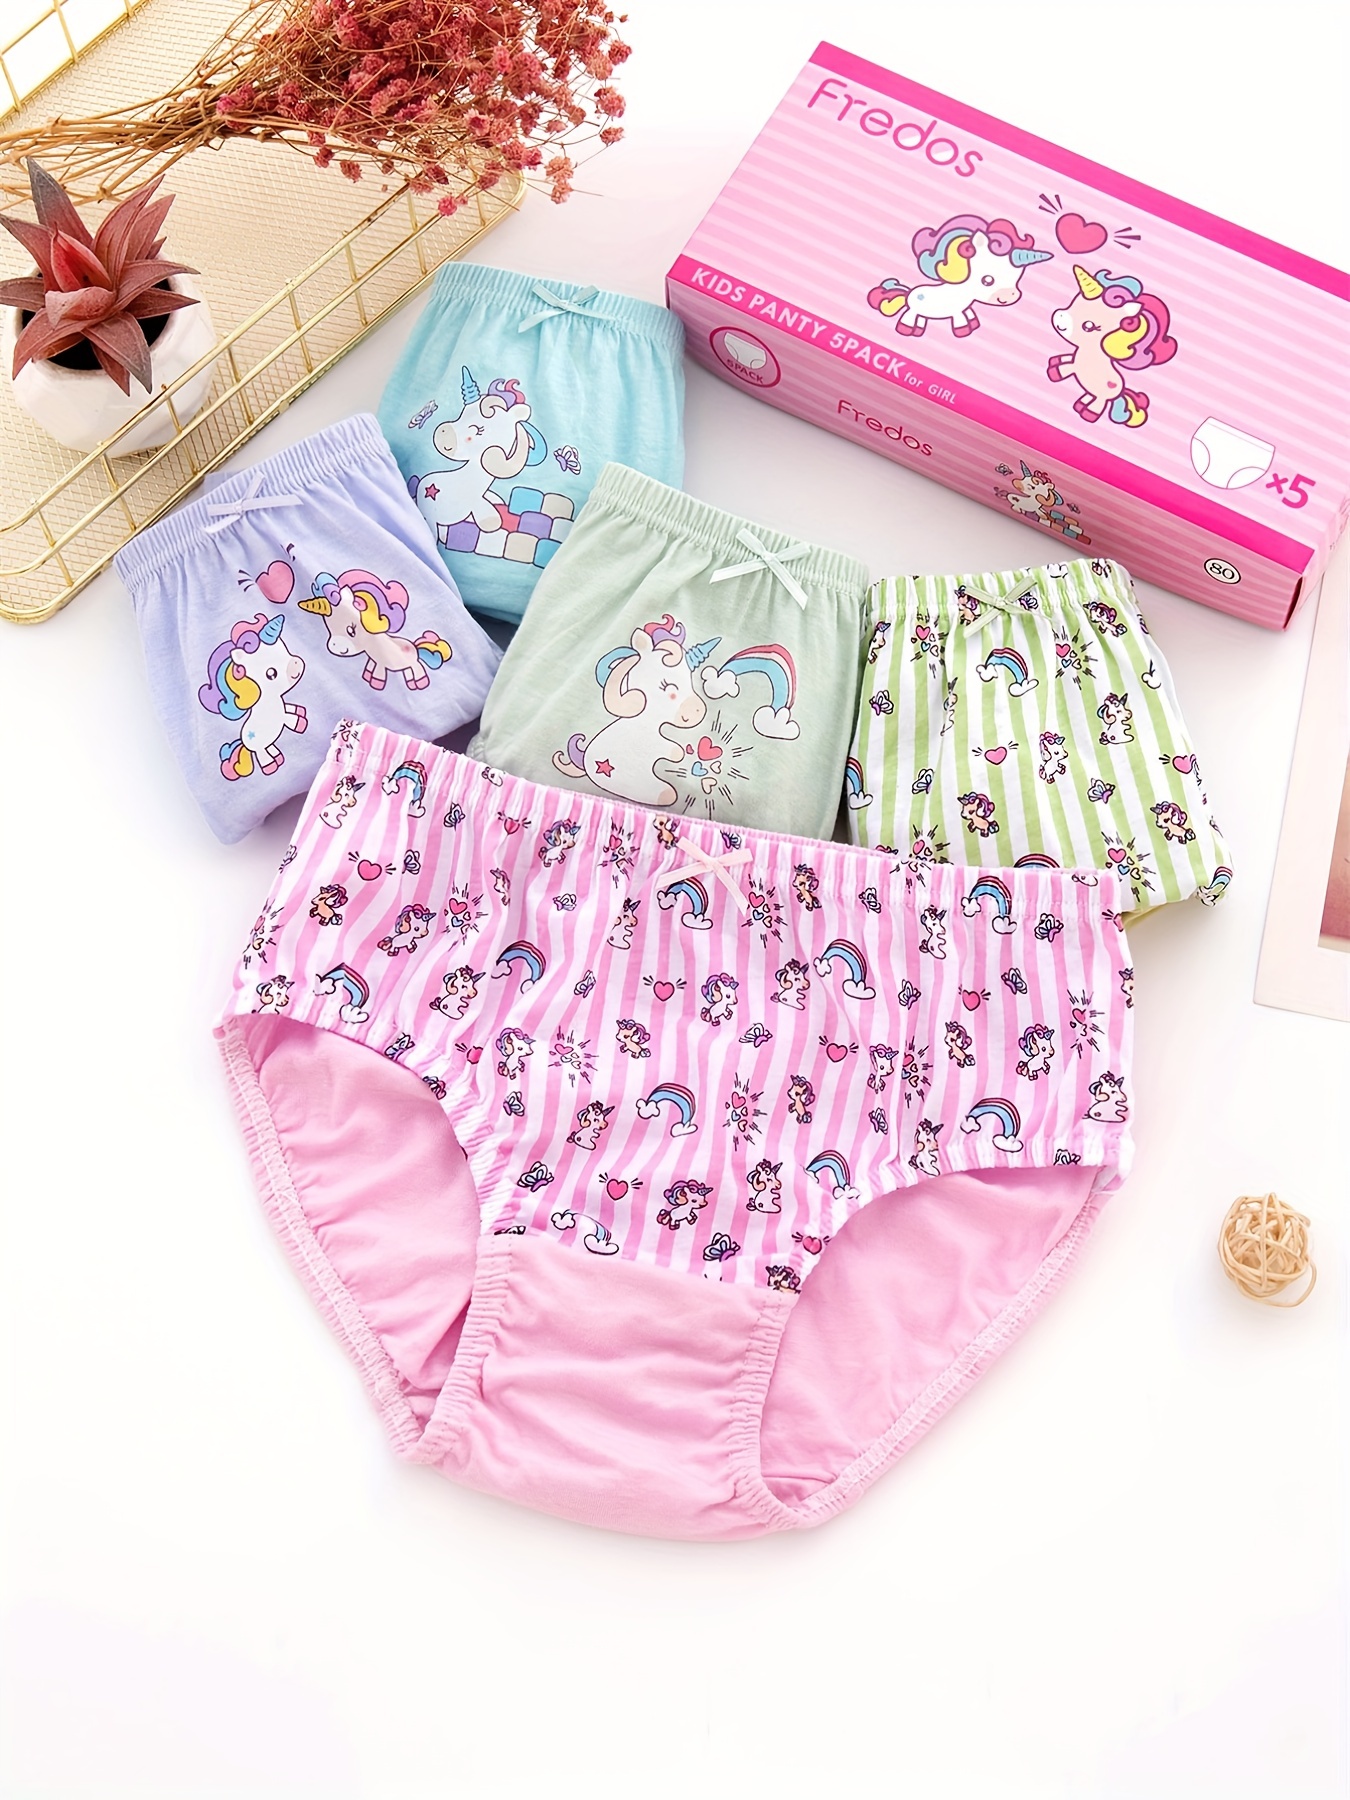 Cotton Women Panties Girls Student Briefs Breathable Underwear Ladies  Mid-Waist Cute Cartoon Embroidery Panty